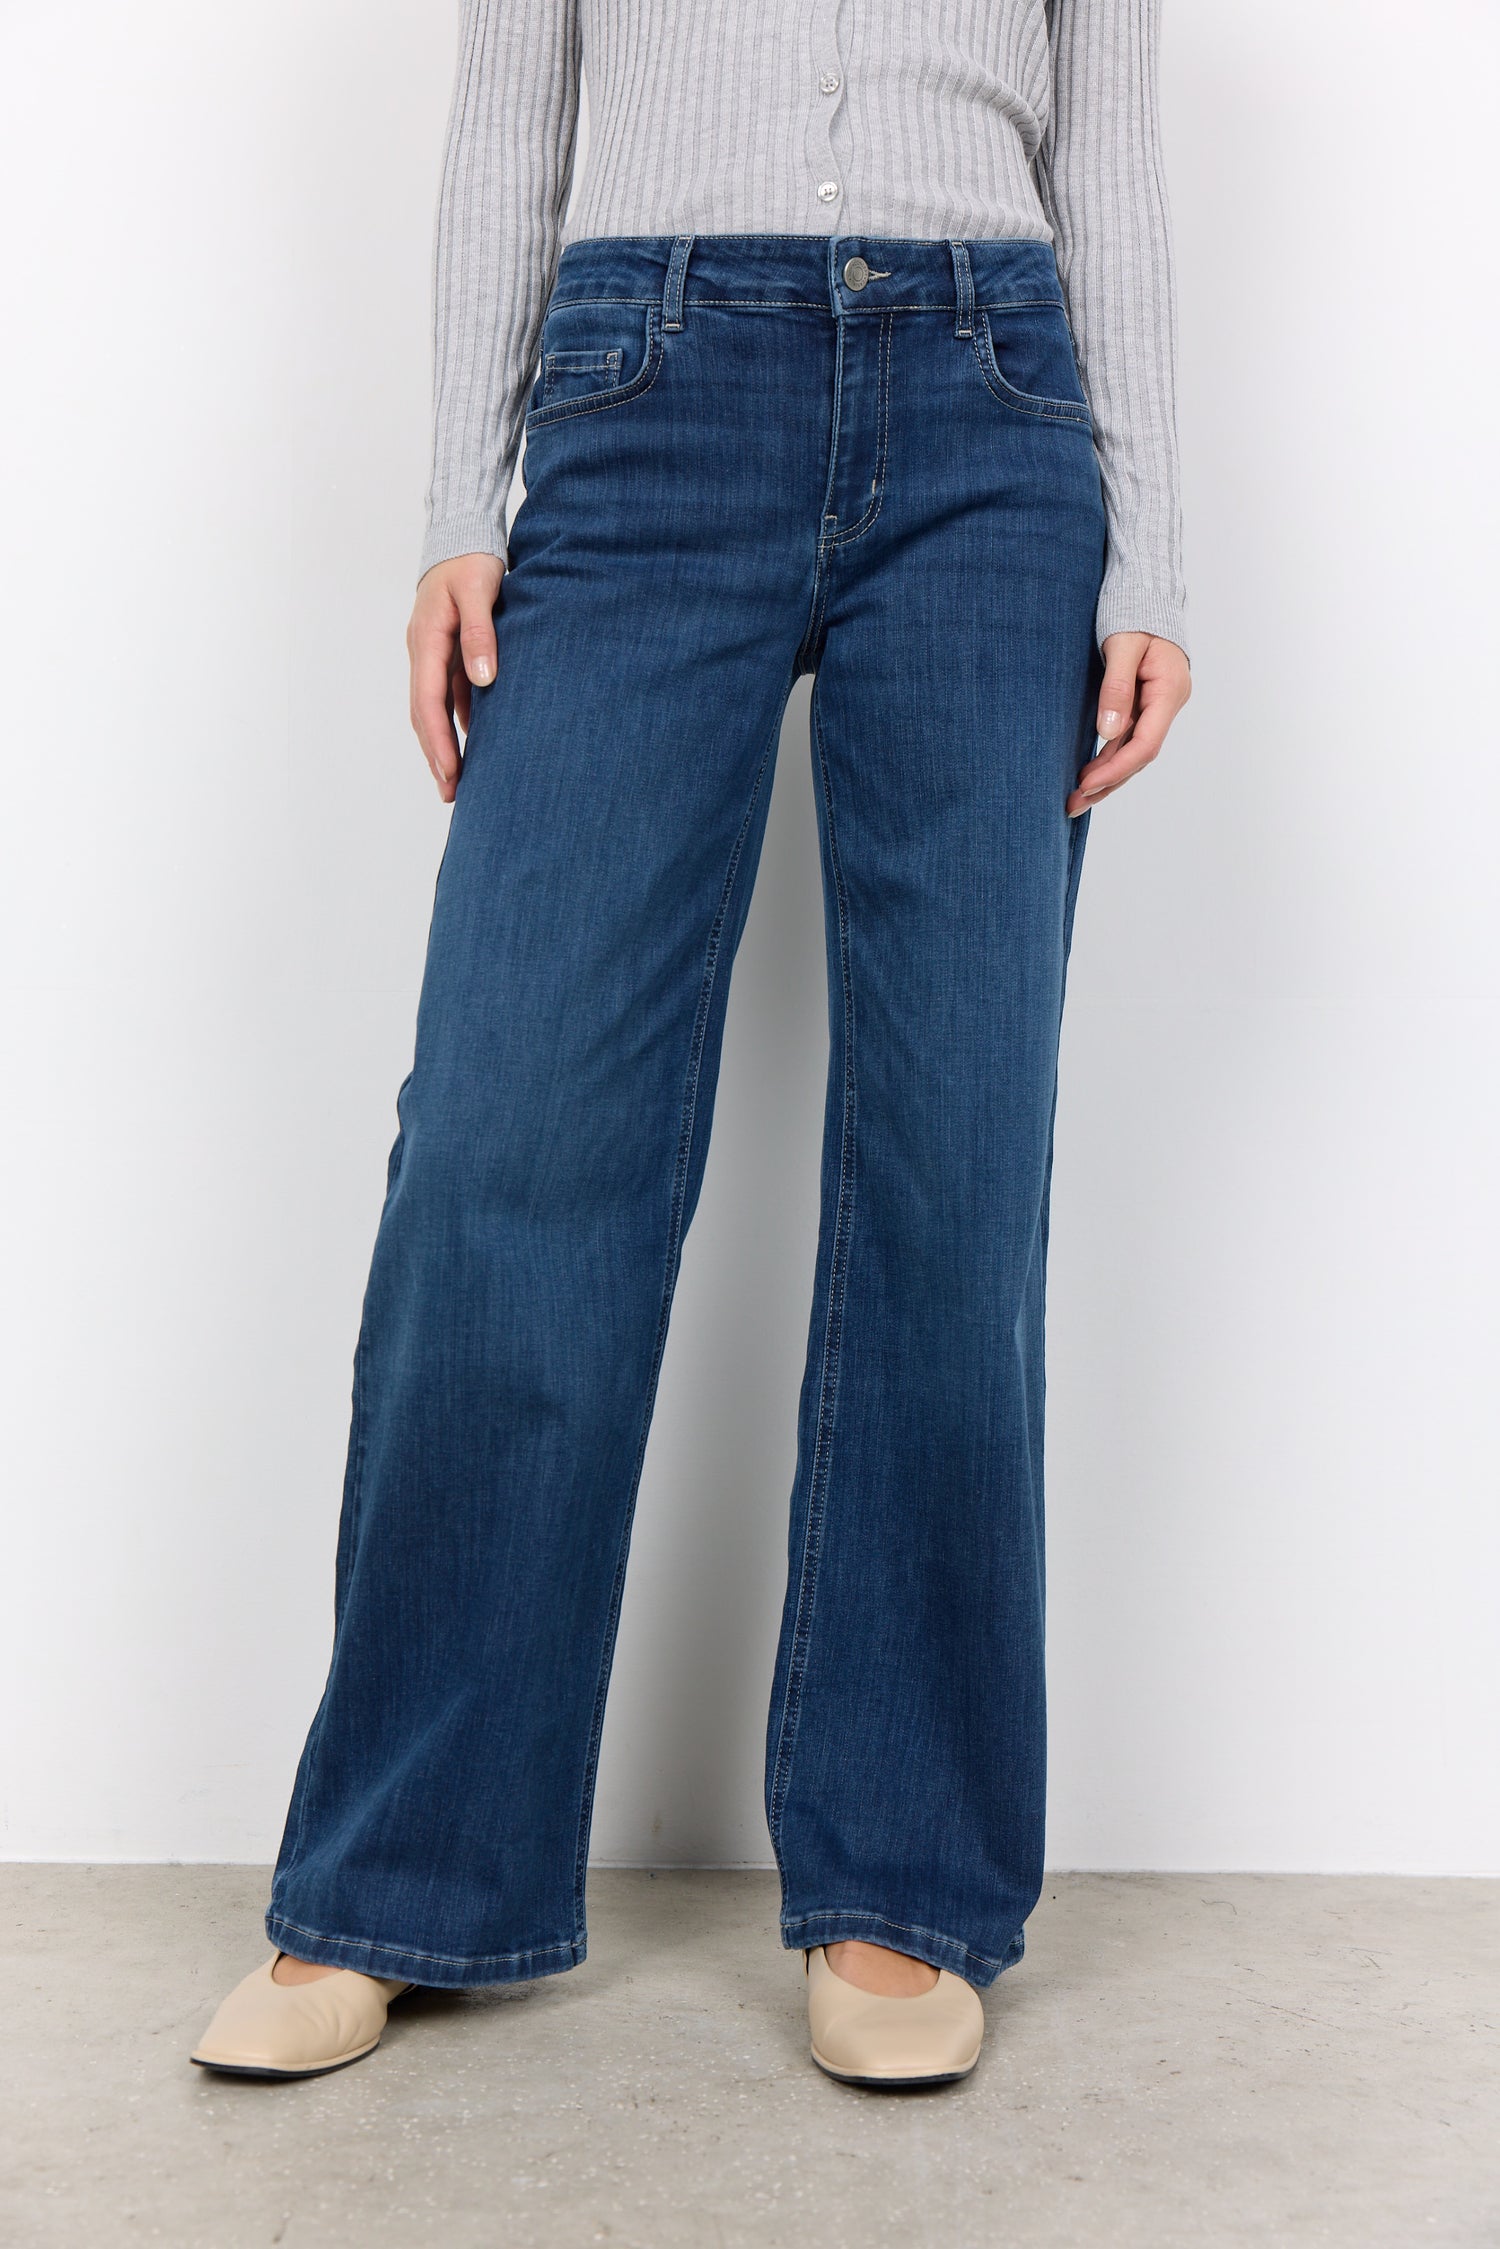 Kimberly 24-B Jeans